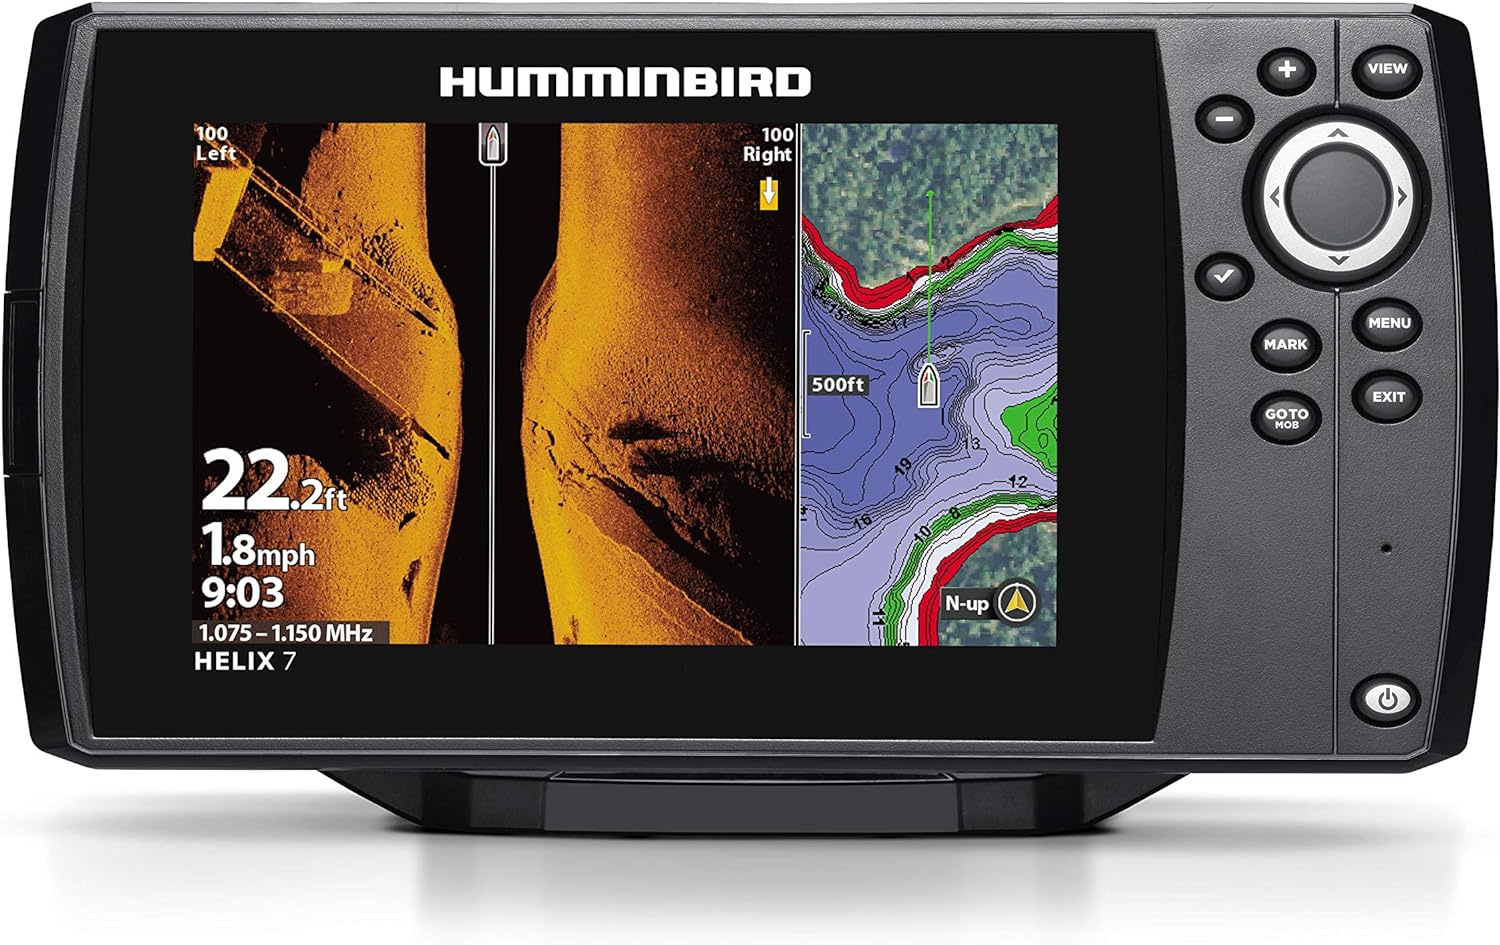 Humminbird 410950-1 Fish Finder Review